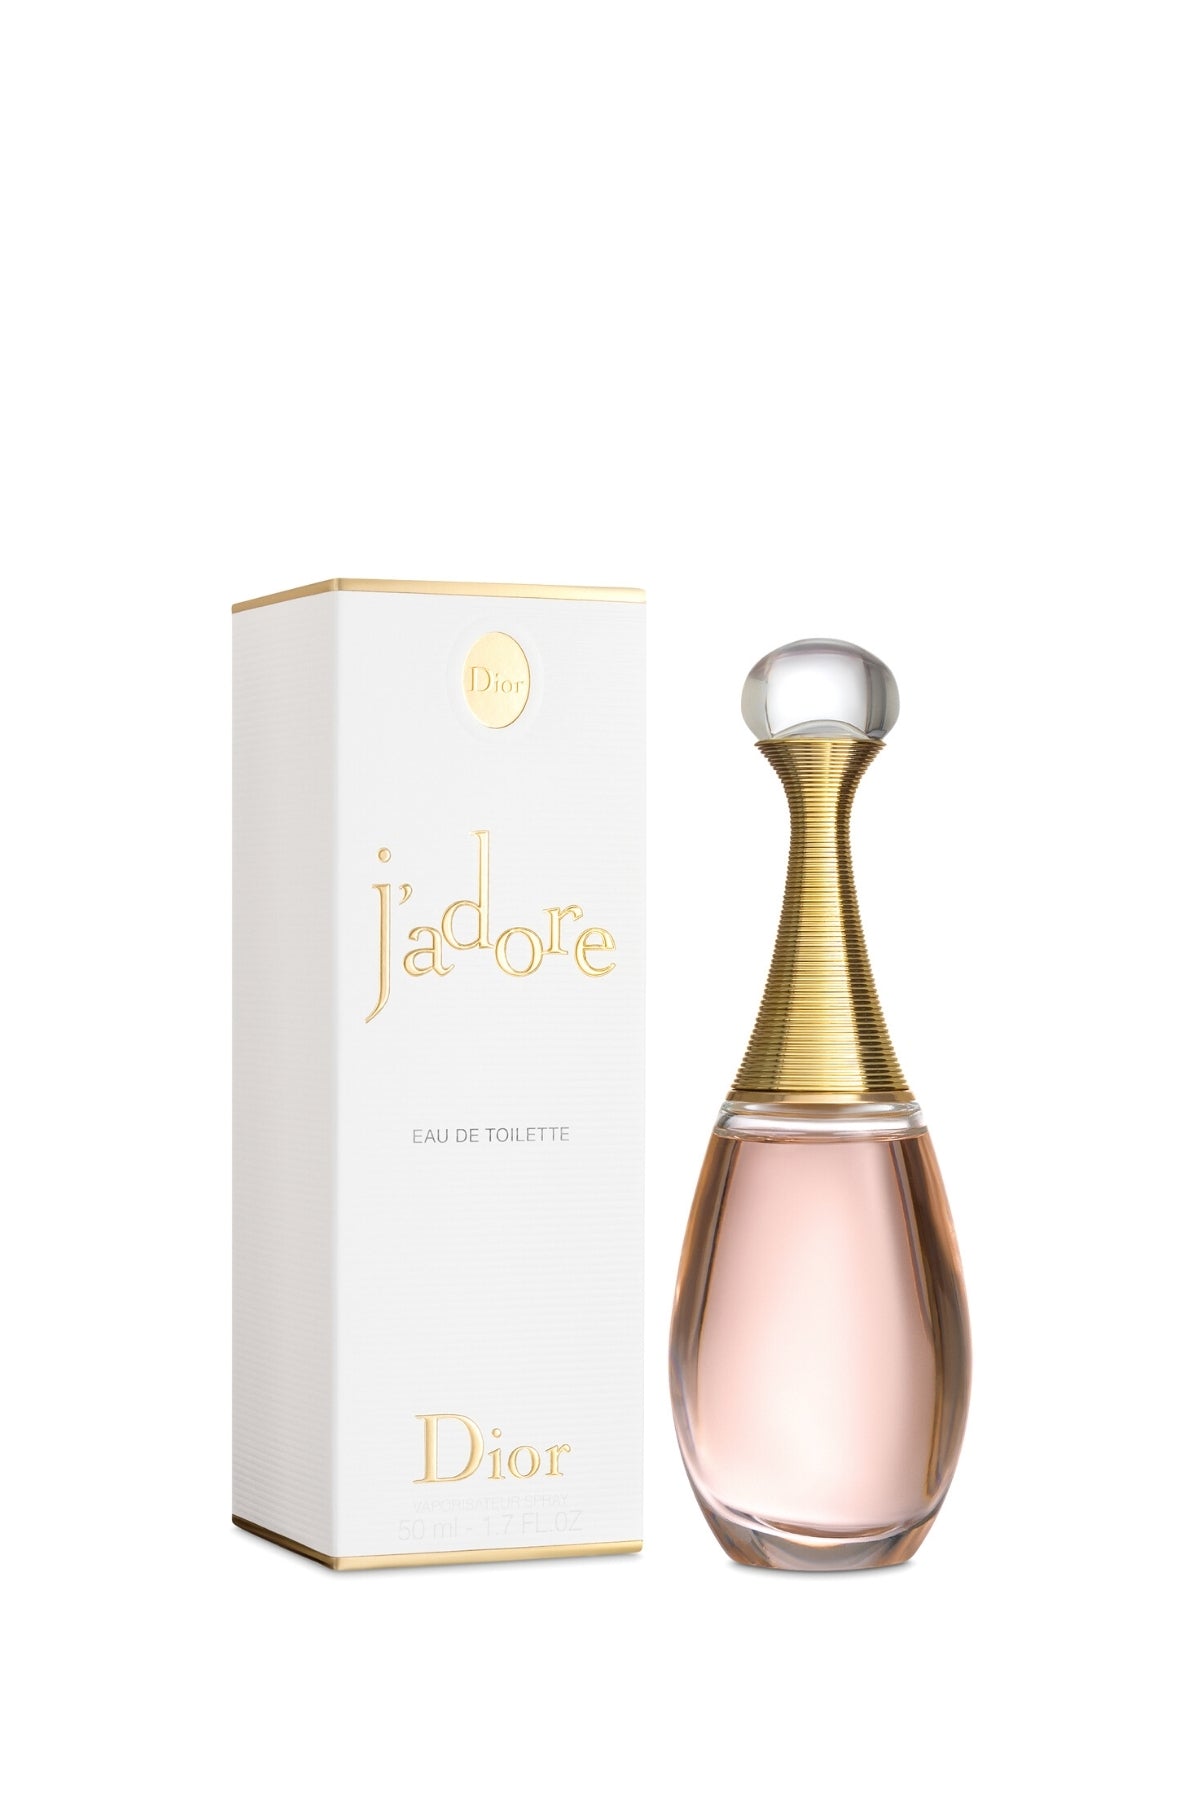 CHRISTIAN DIOR  JAdore EDT 100ml  Eros Perfume